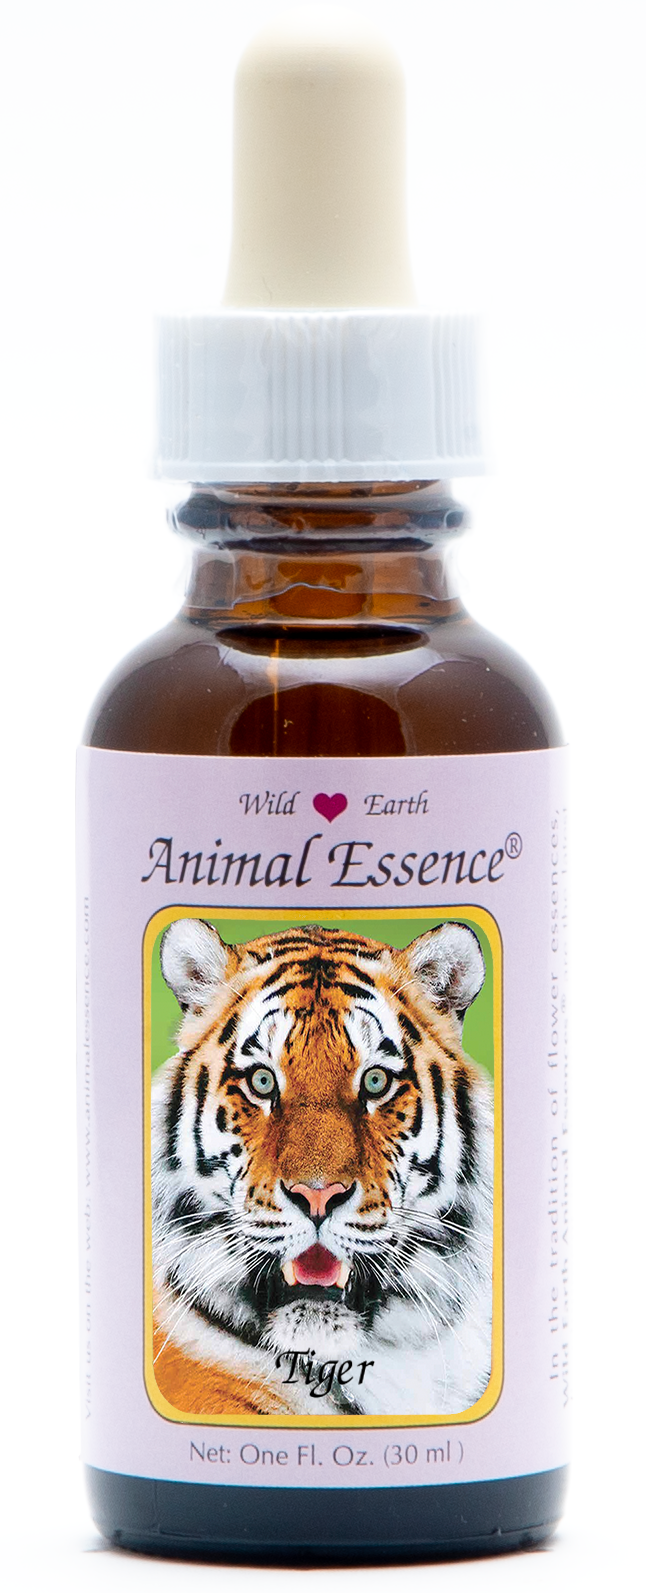 Tiger animal essence 30ml